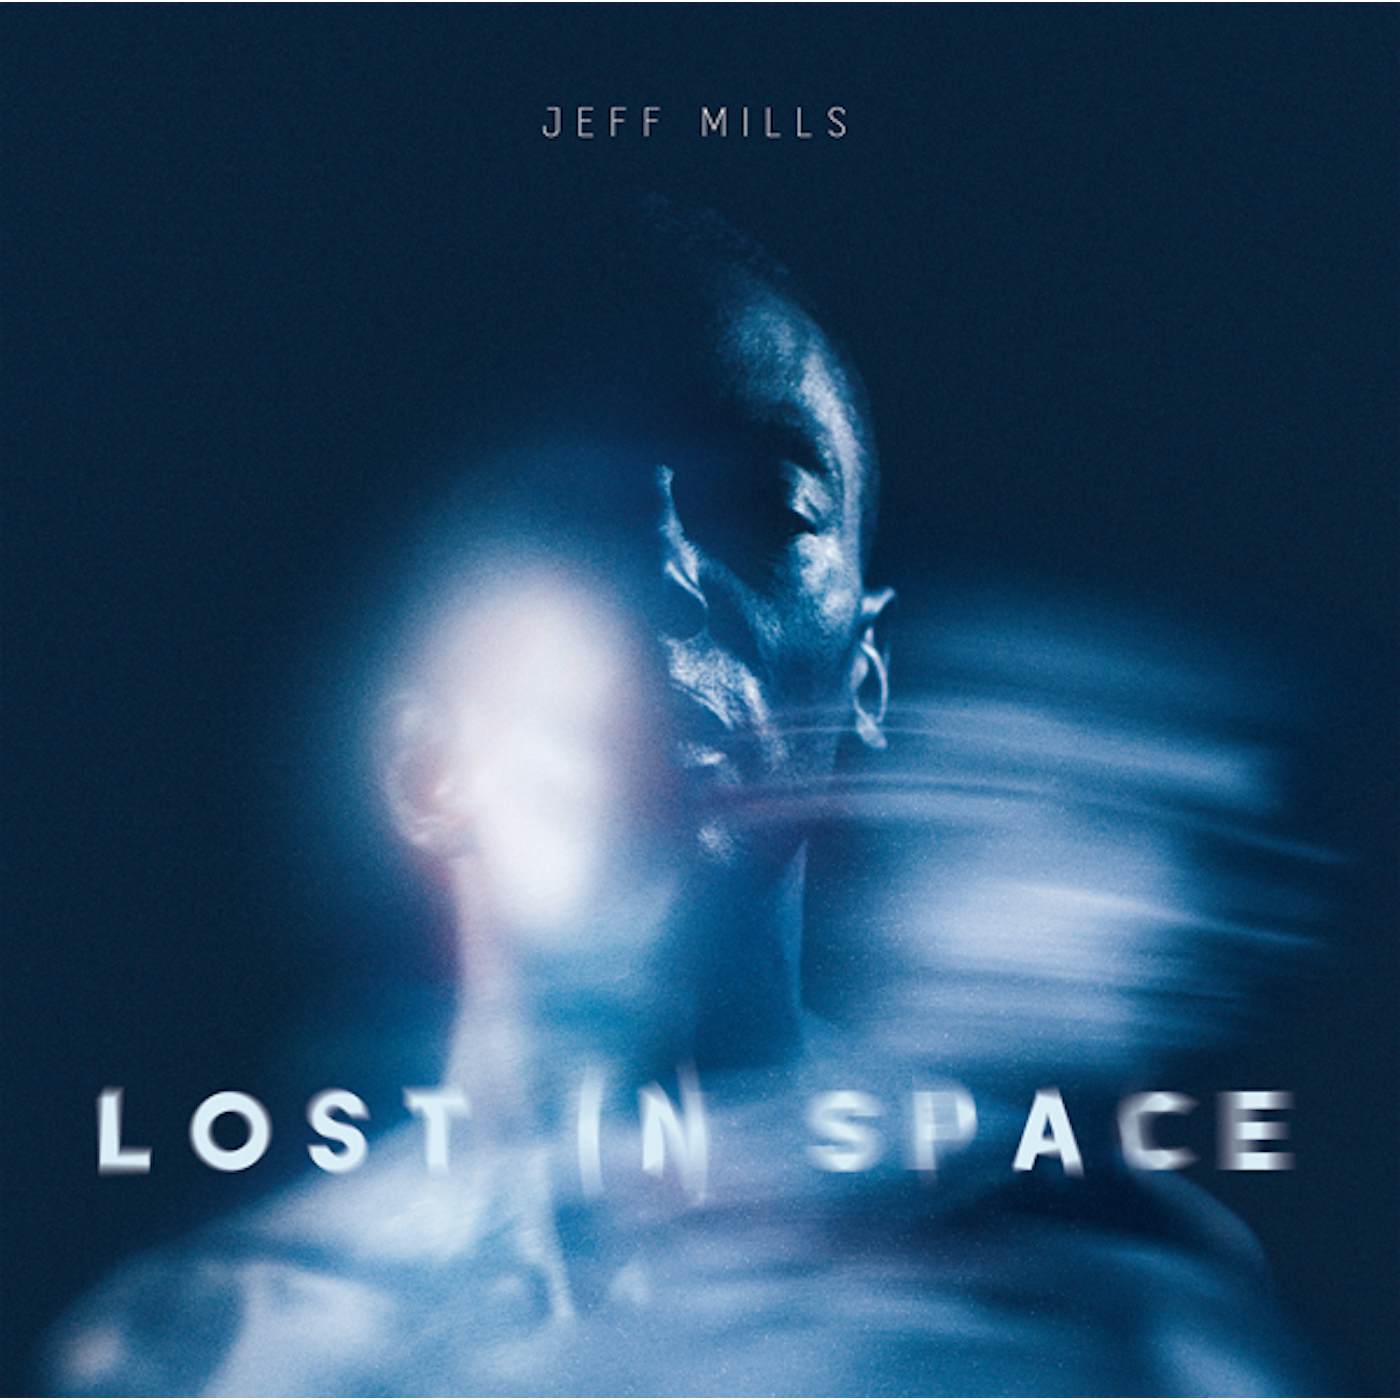 Jeff Mills LOST IN SPACE Vinyl Record